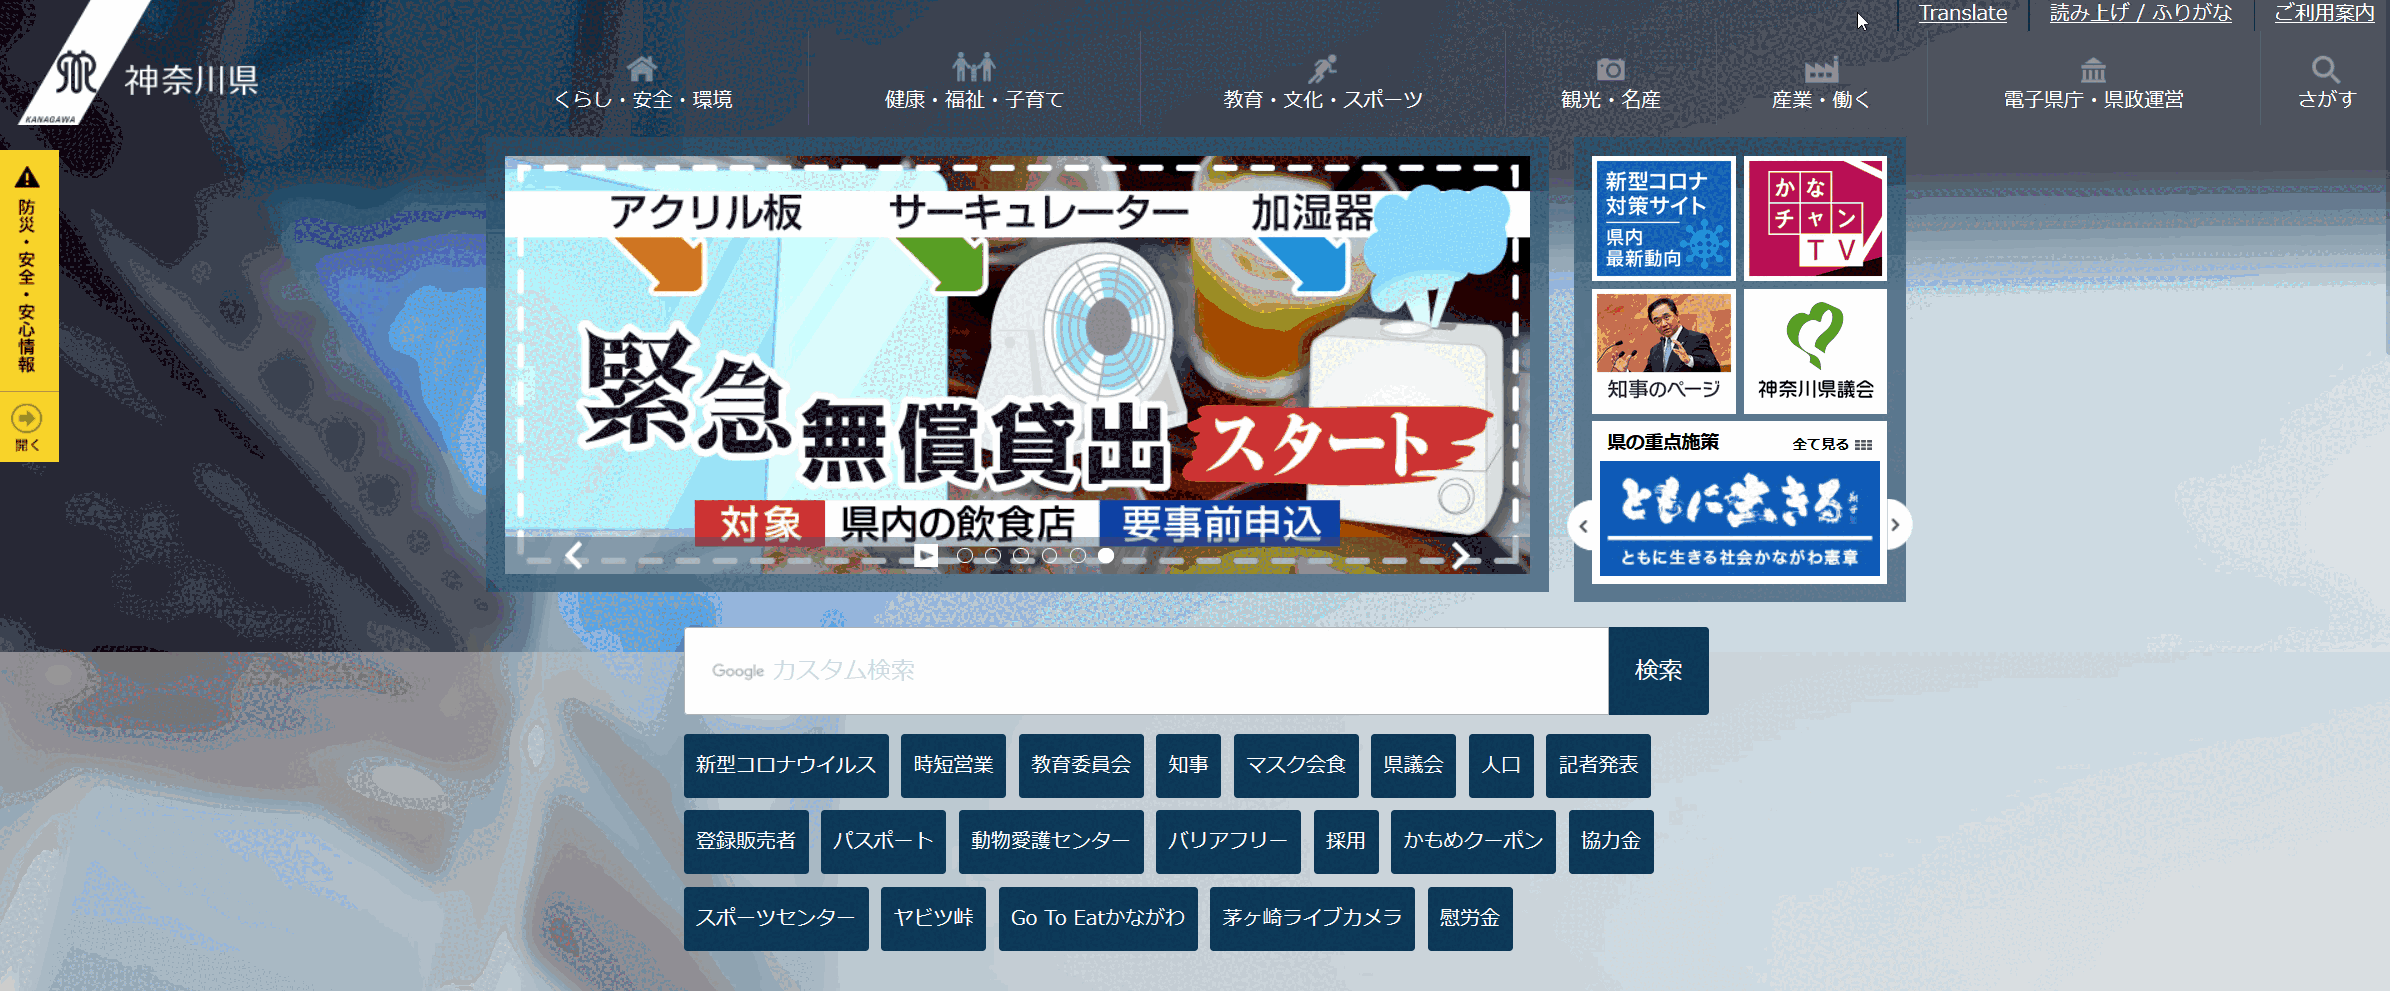 Kanagawa website had a long list of languages